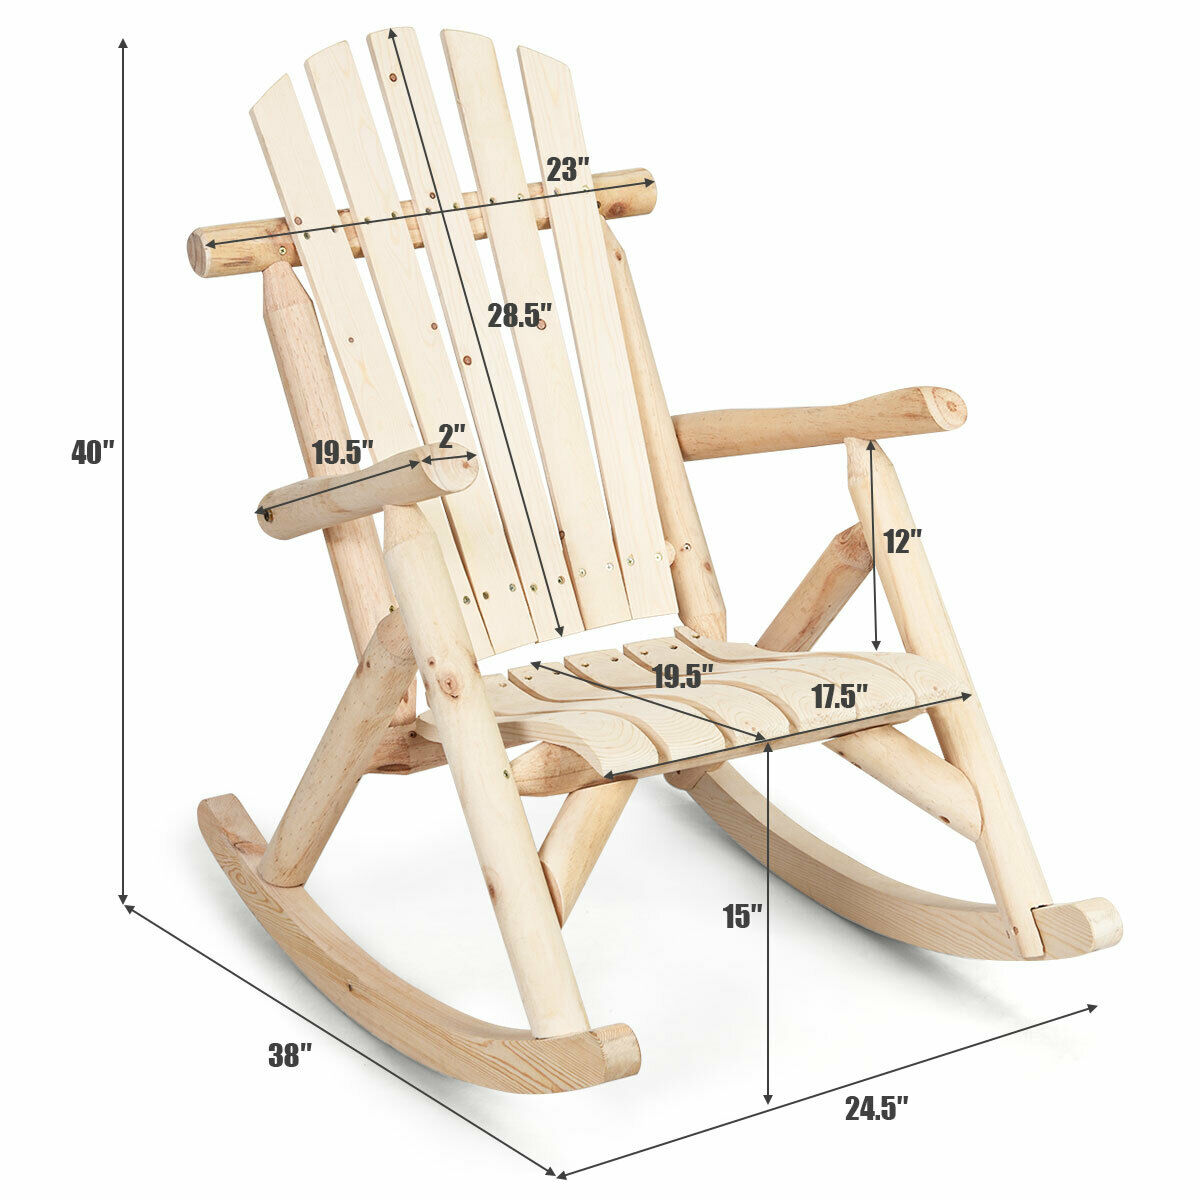 Costway Log Rocking Chair Wood Single Porch Rocker Lounge Patio Deck Furniture Natural - image 2 of 10